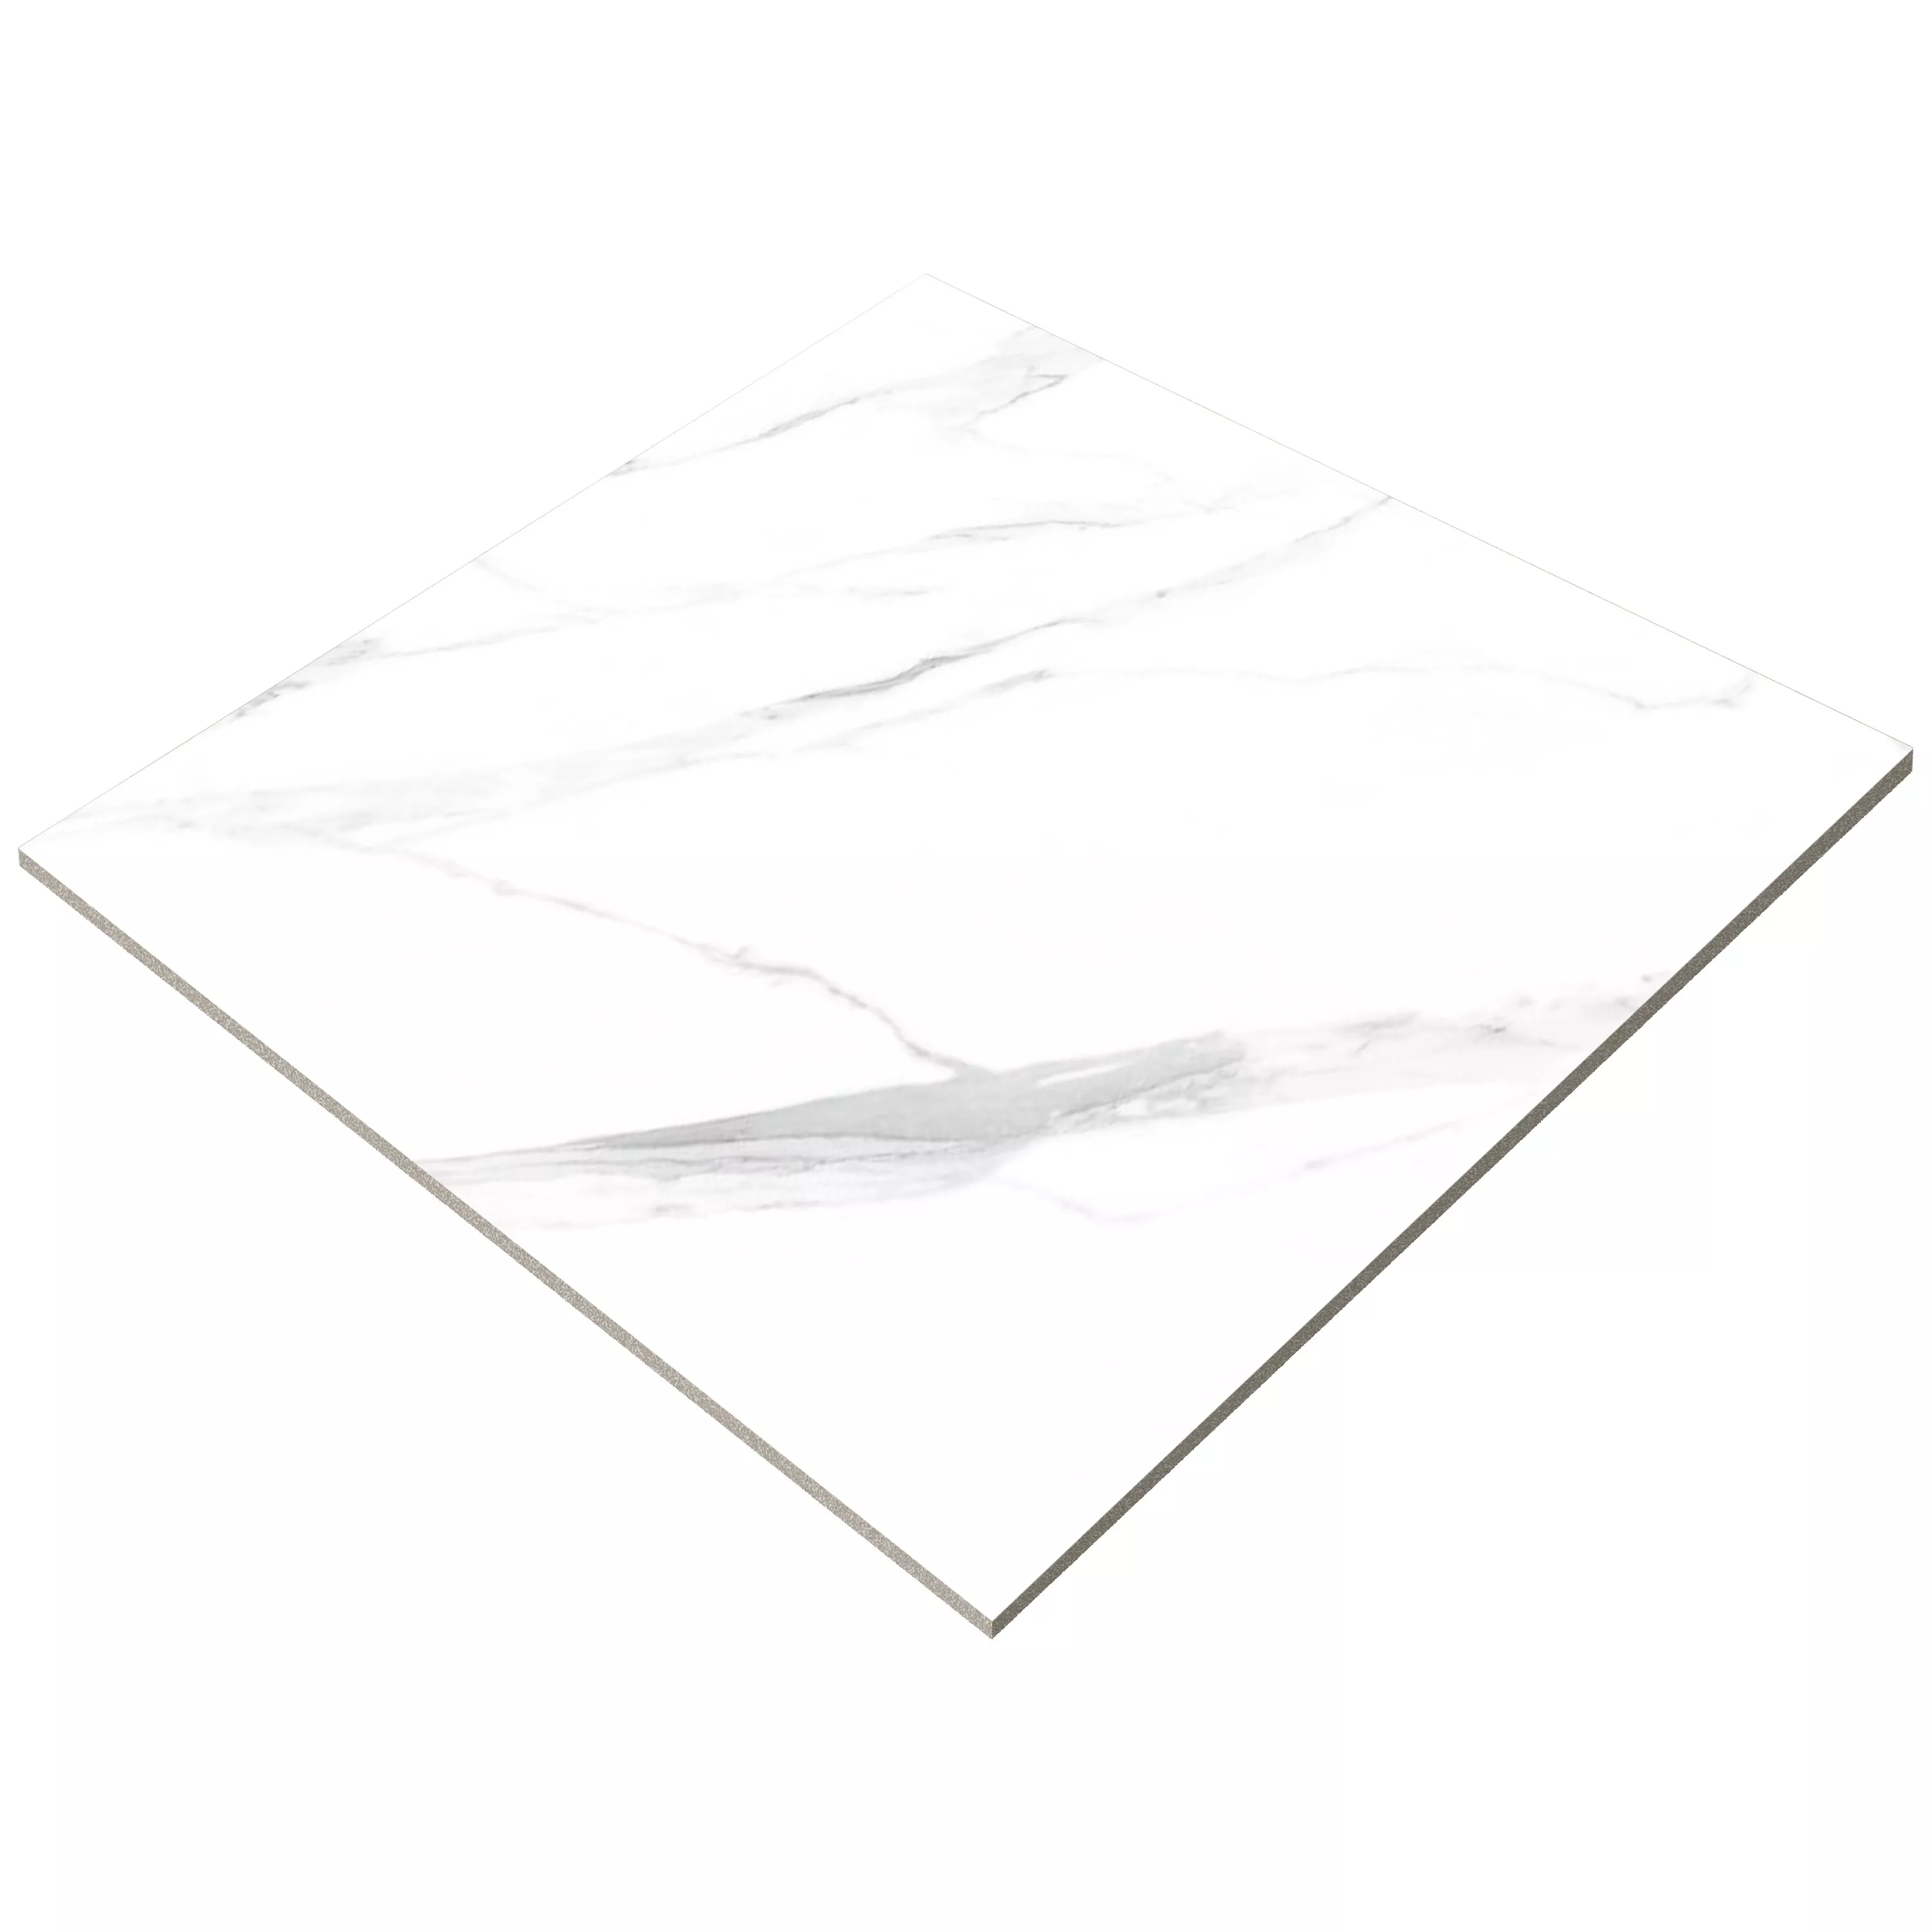 Vzorek Podlahové Dlaždice Serenity Mramorový Vzhled Leštěná Bílá 60x60cm